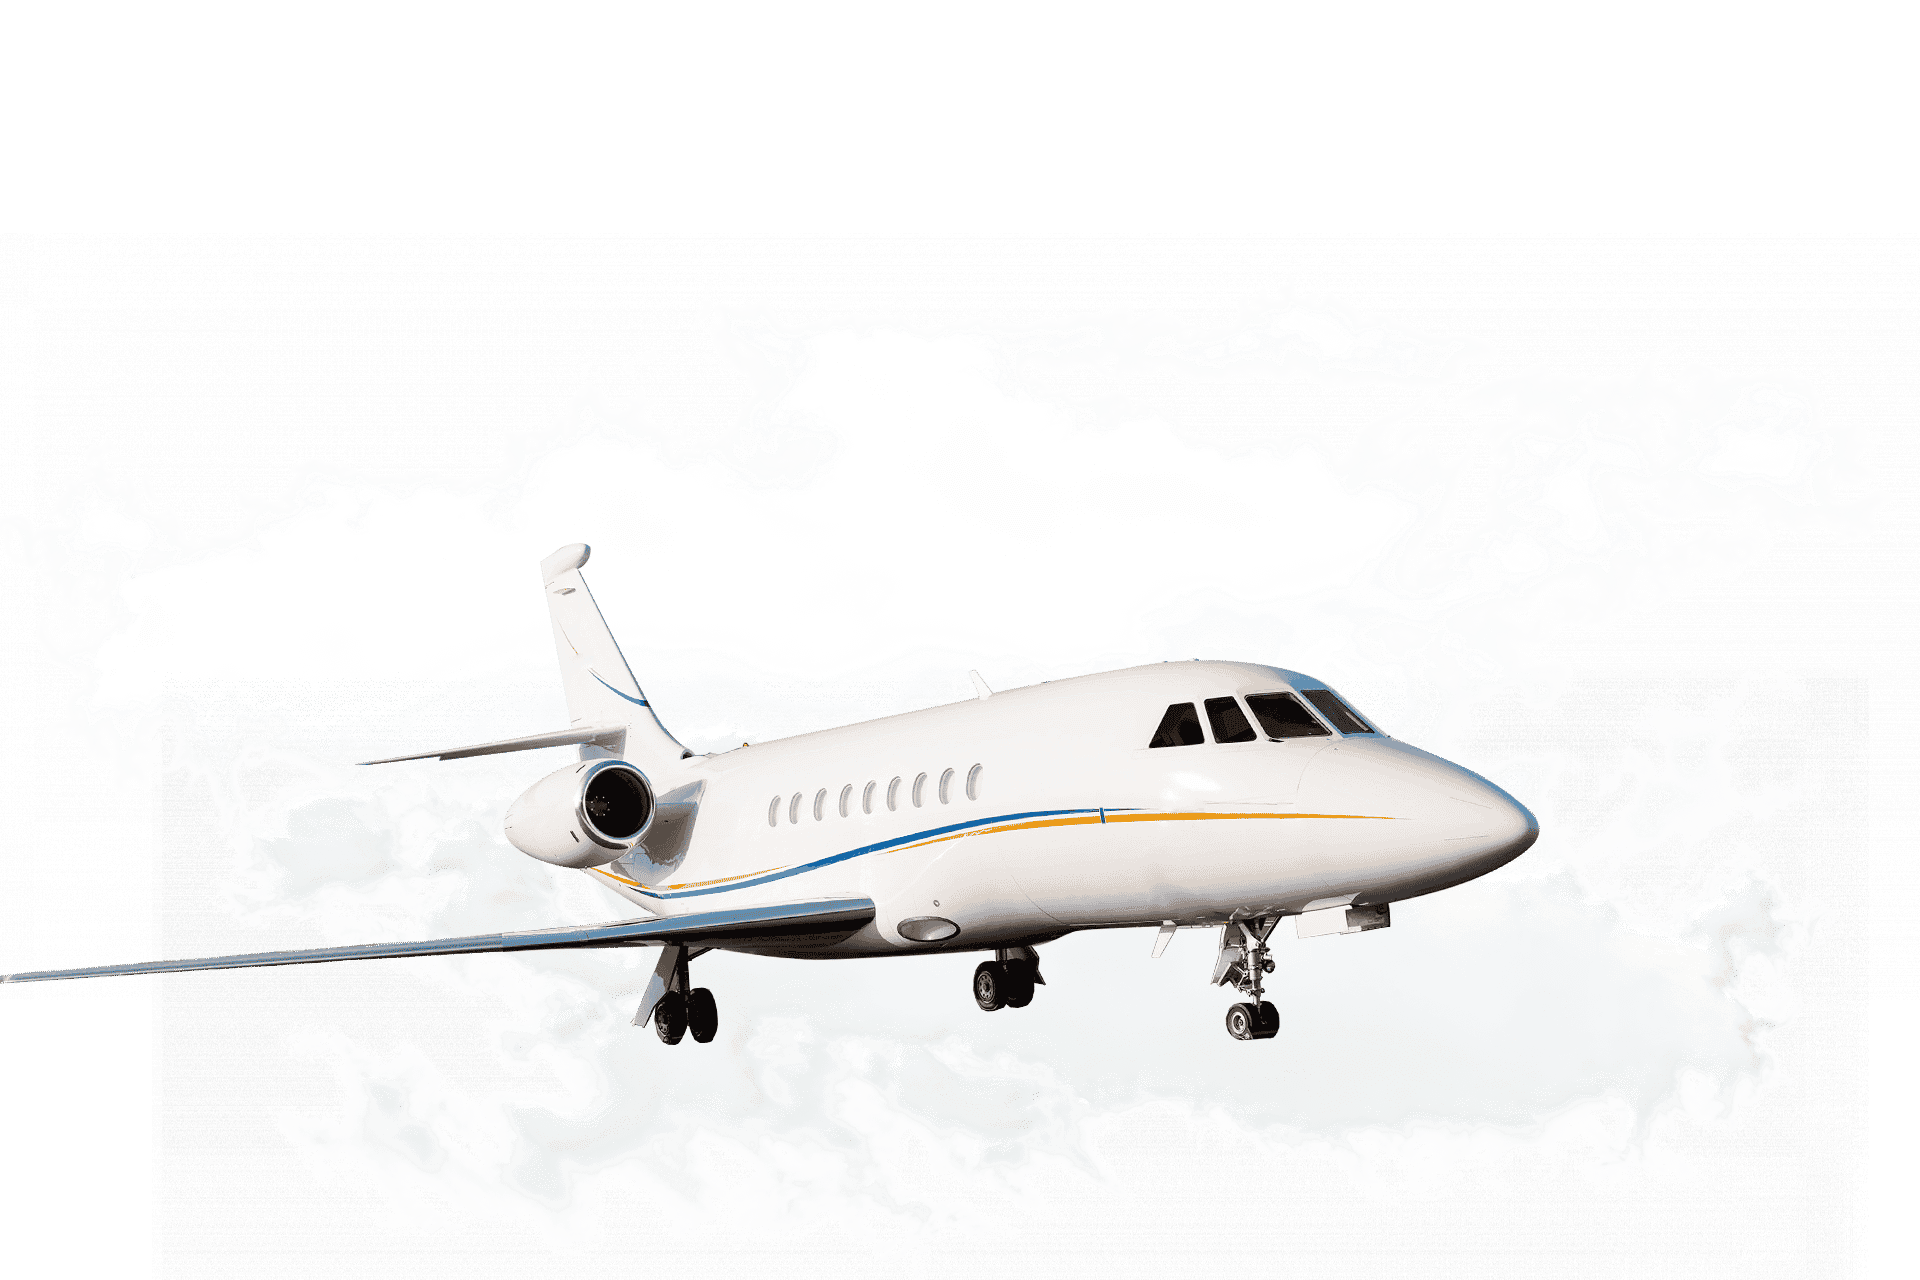 Mira Charter Dassault Falcon 2000